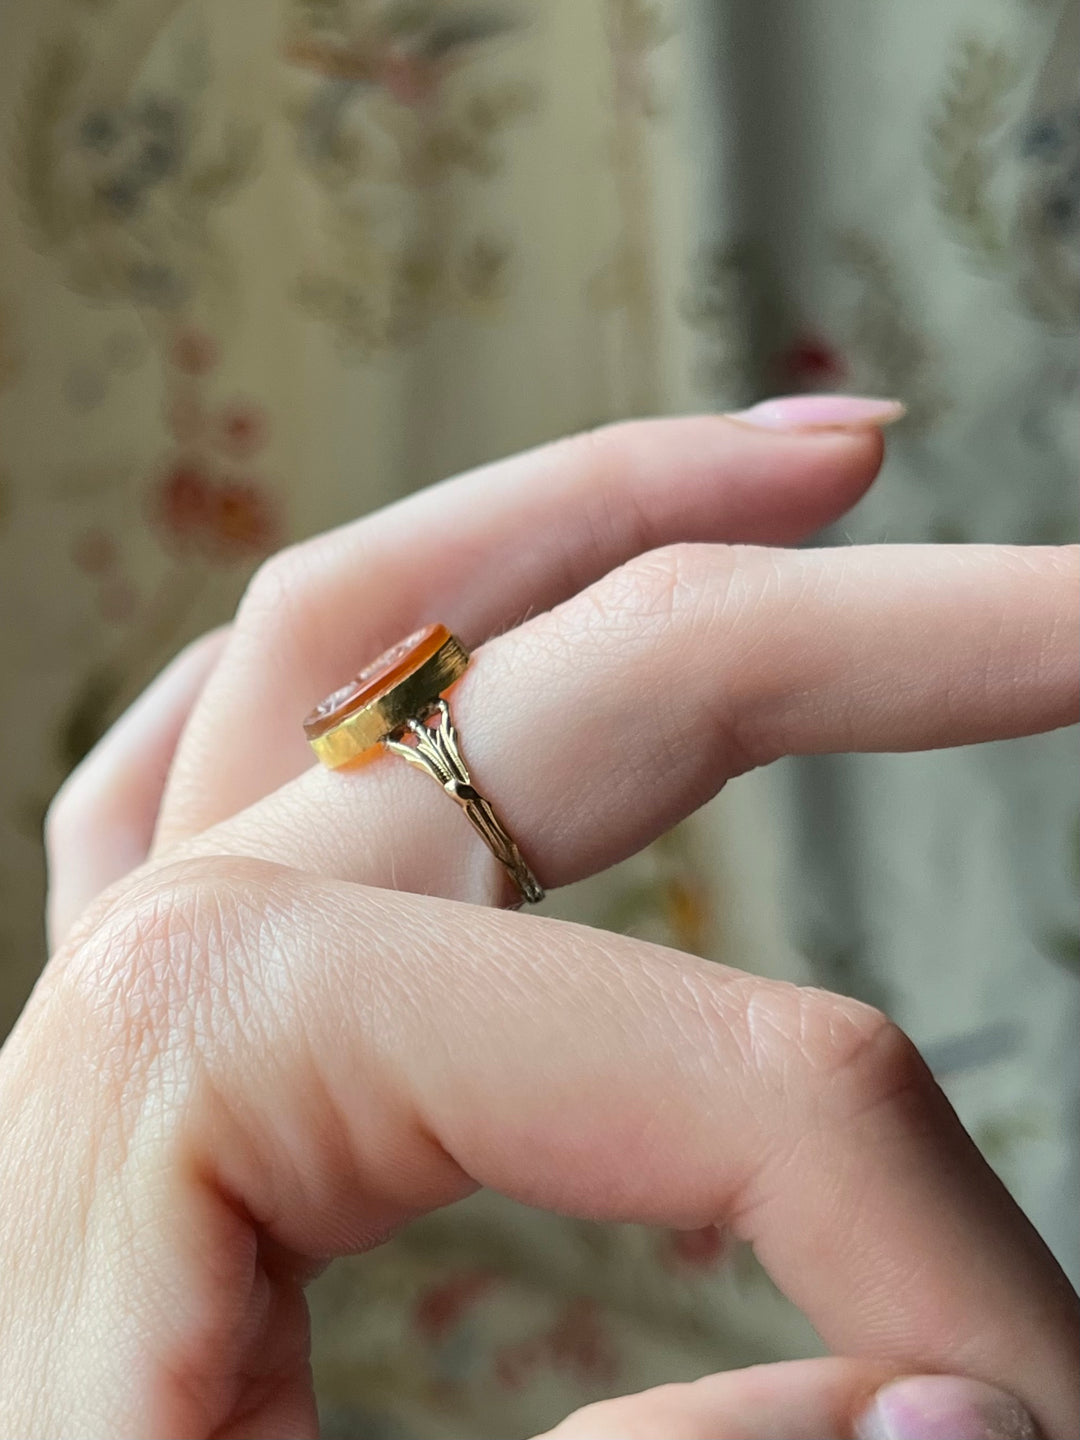 Amber Honey Persian Carnelian Intaglio Ring in 14ct